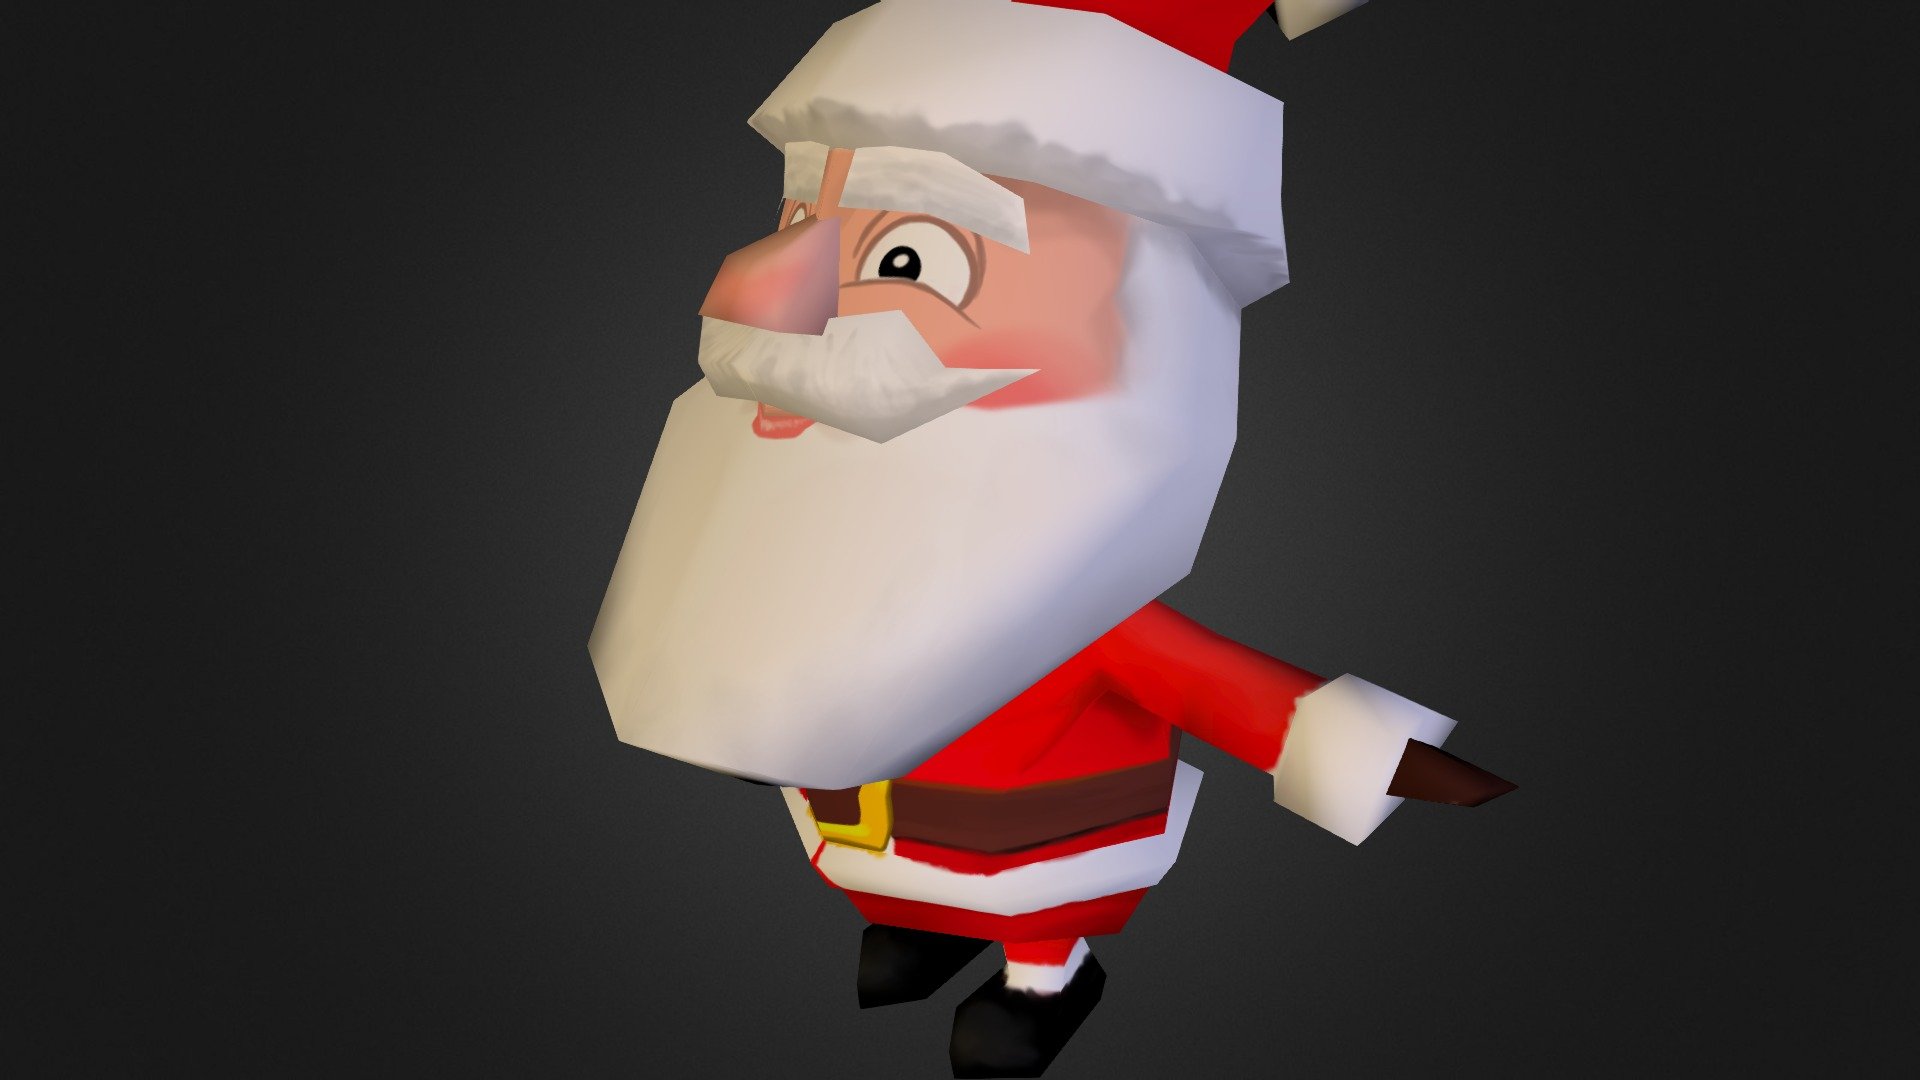 Low poly santa for mobile phone game - Super low Poly Santa - 3D model by davidmcdermott 3d model